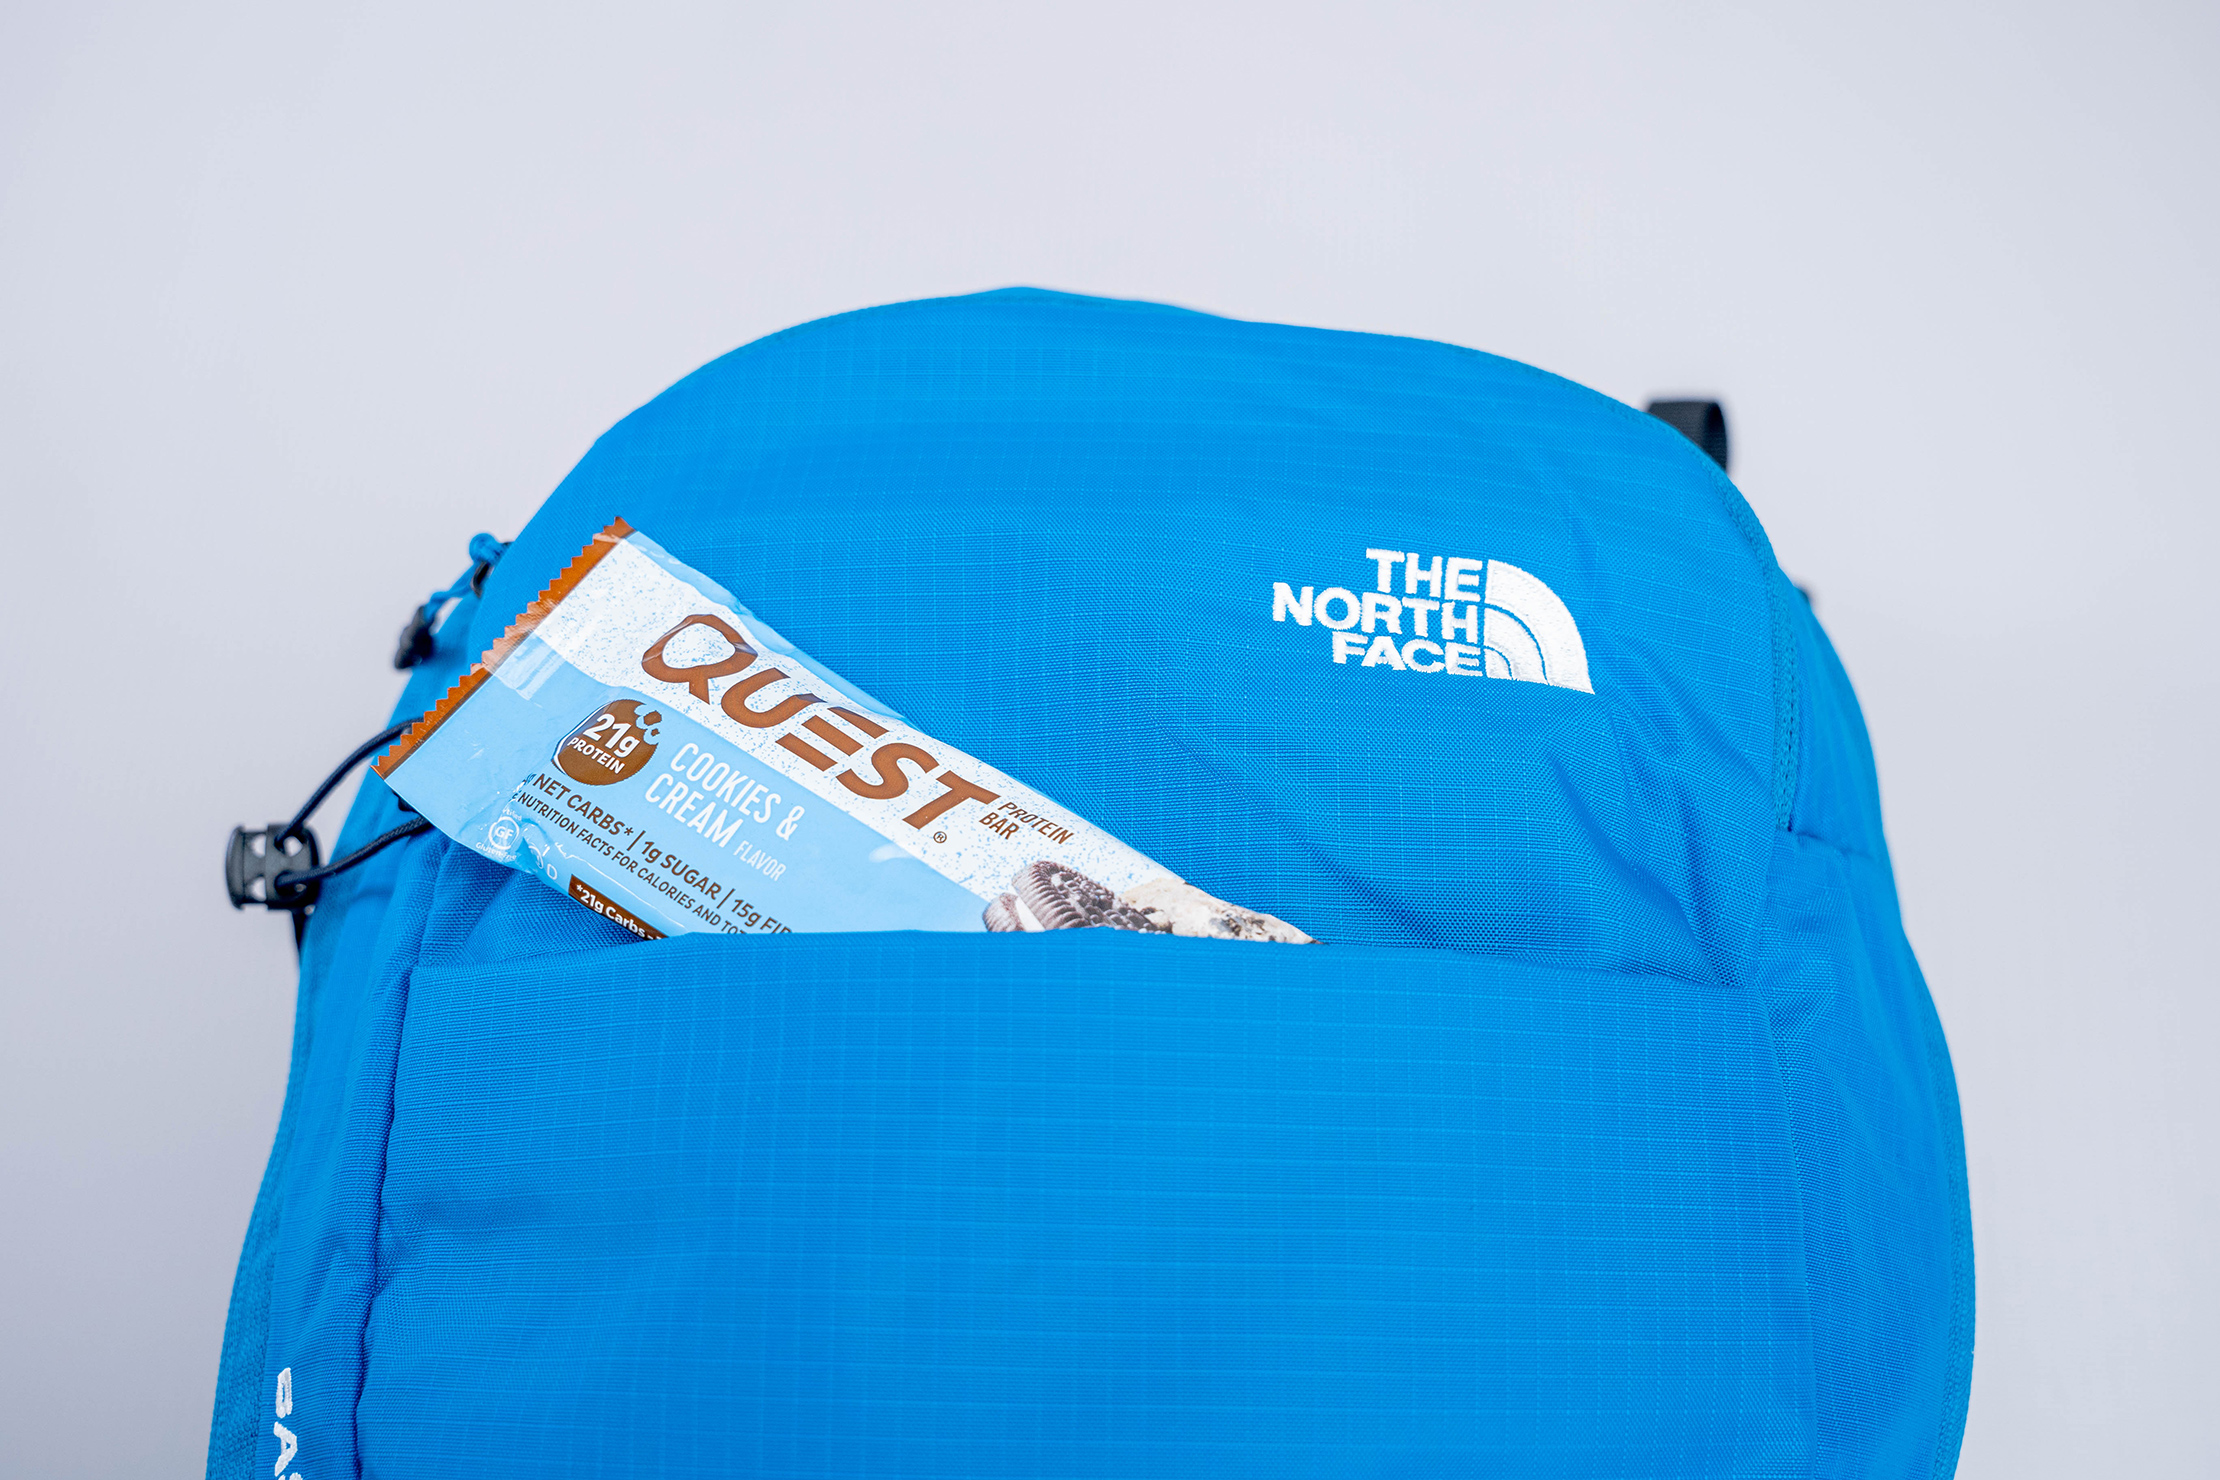 The North Face Basin 18 Backpack Front Pocket